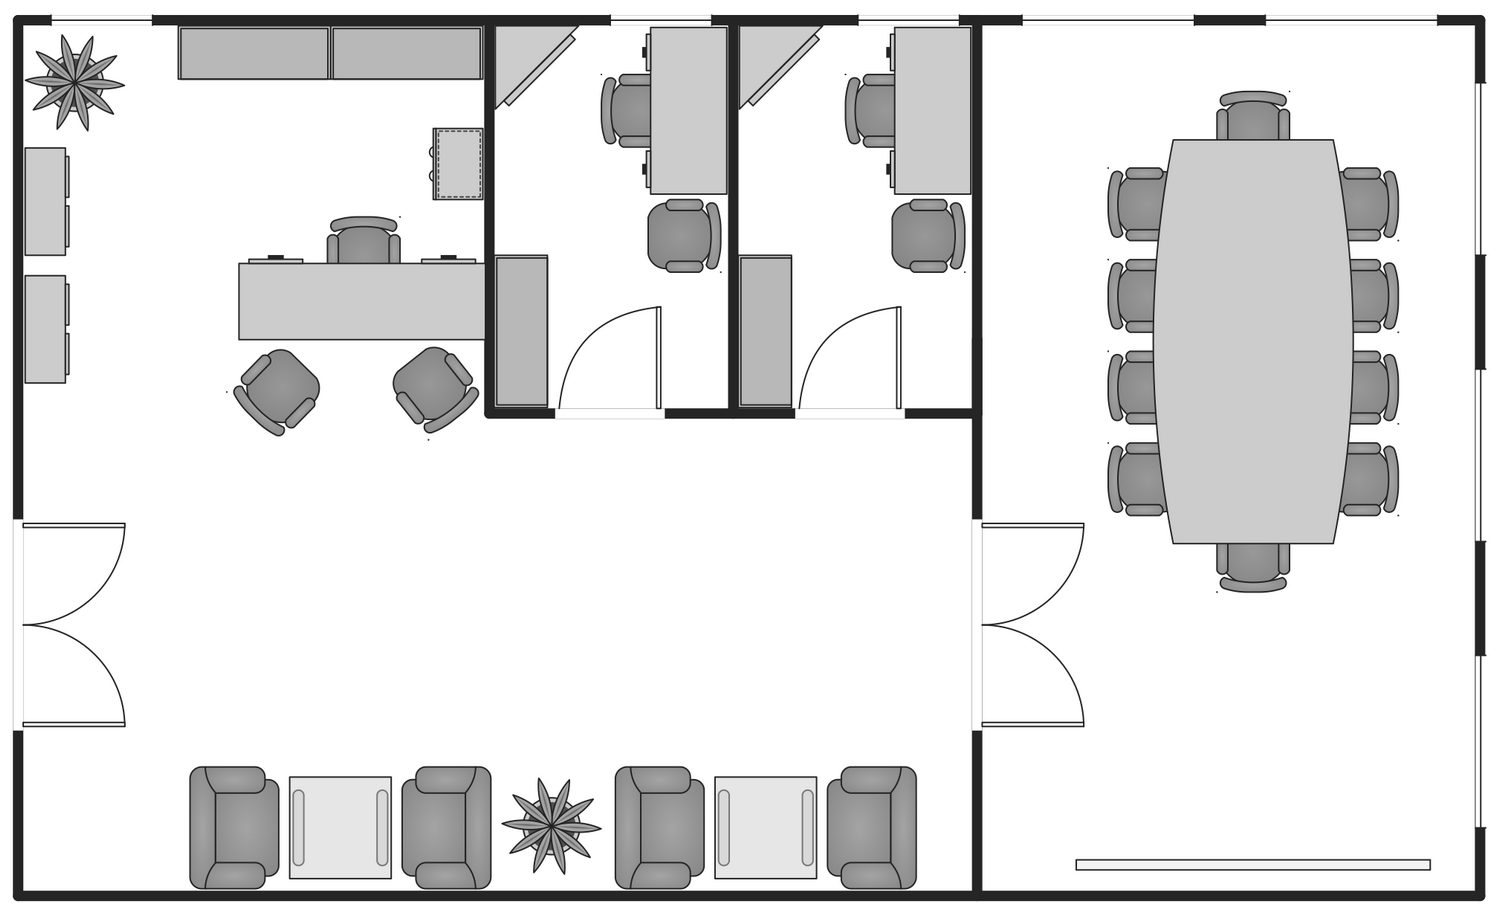 Basic Floor Plan - Small Office Floor Plan